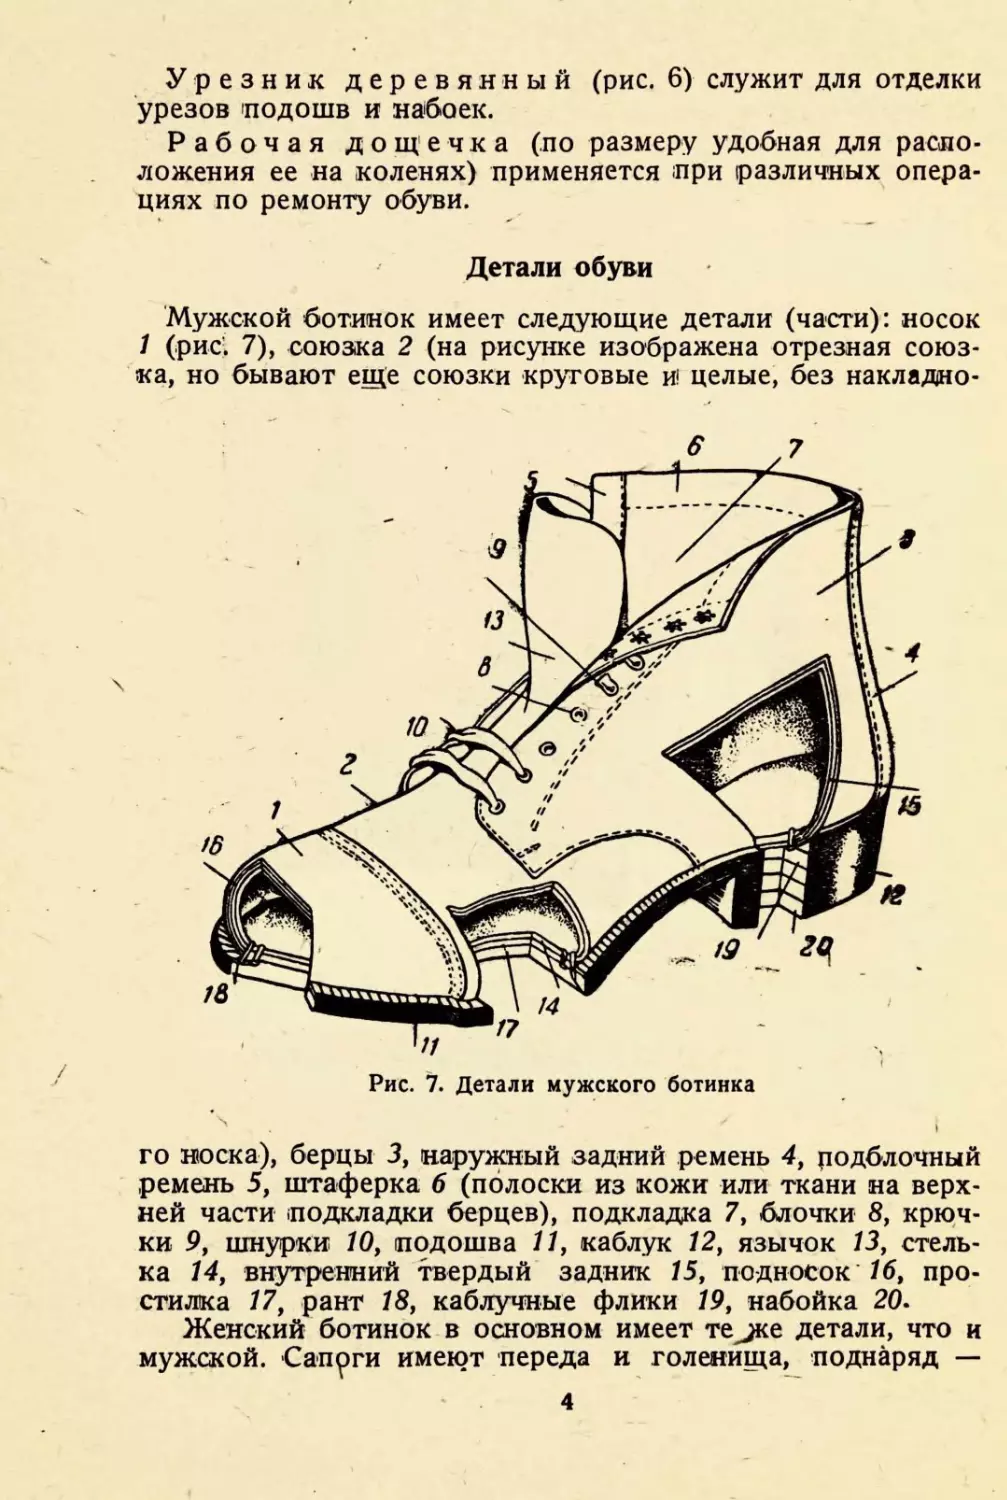 Детали обуви